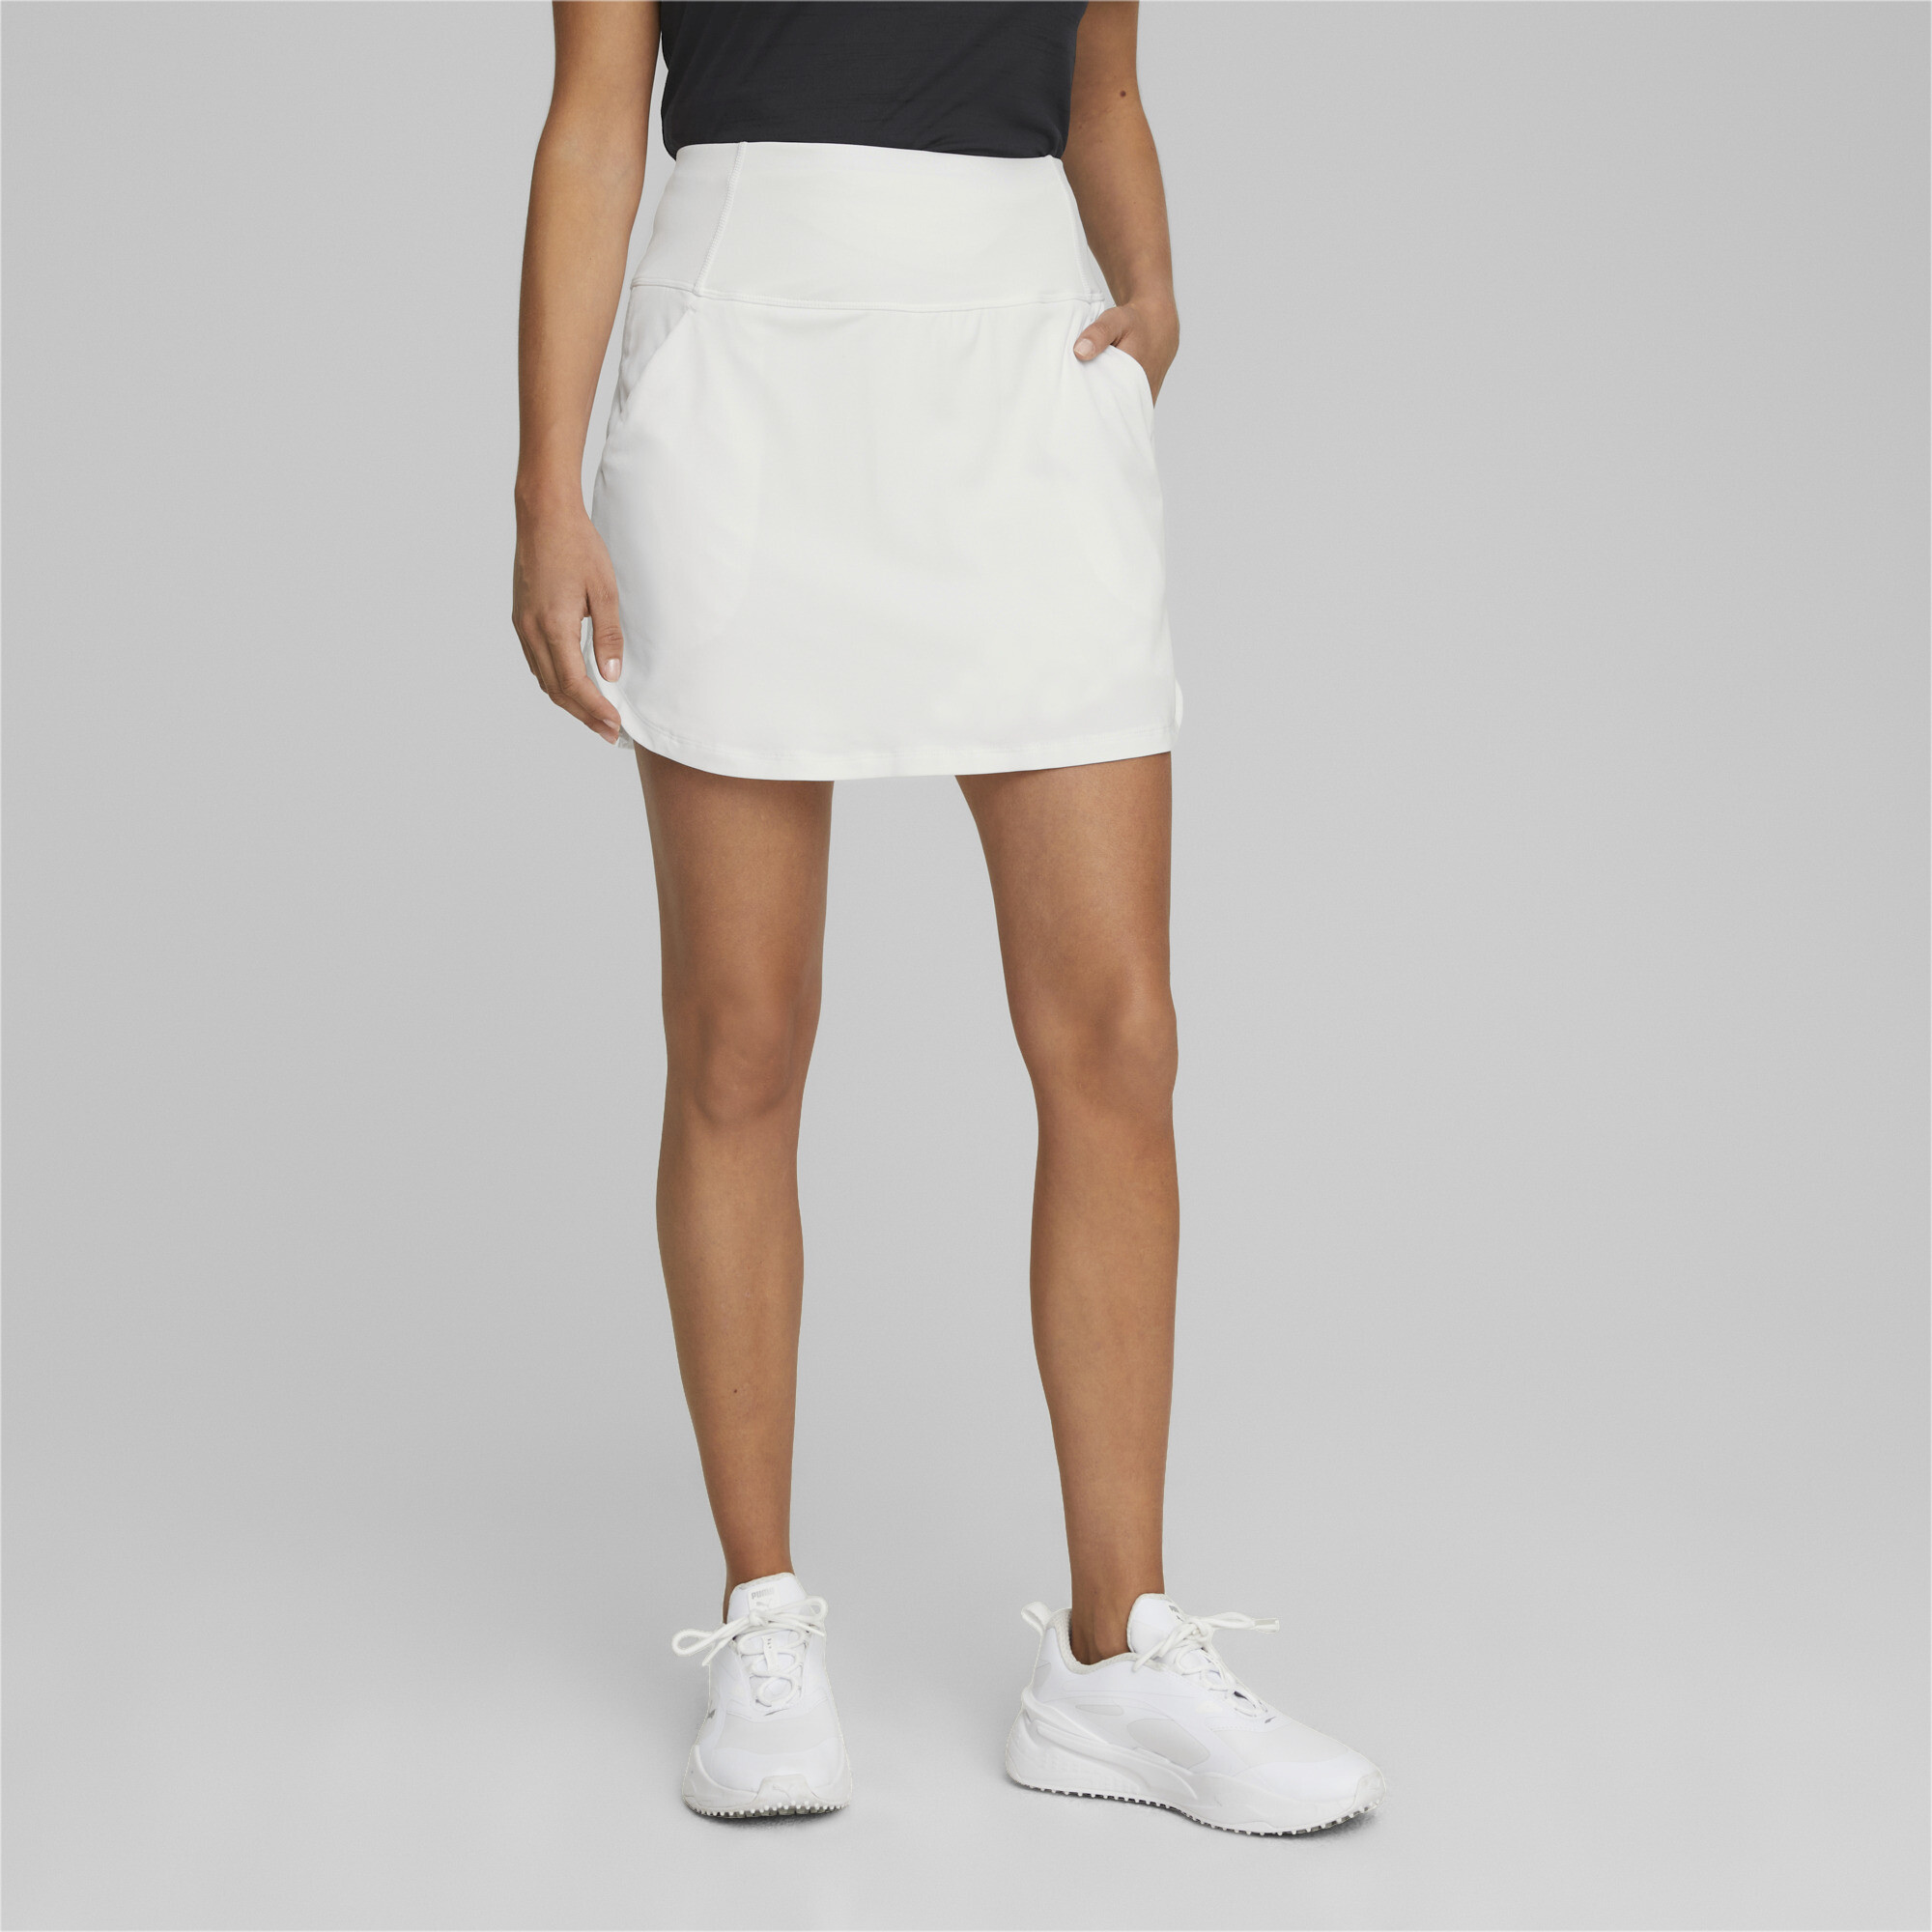 Women's Puma PWRMESH Golf Skirt, White, Size XXS/S, Clothing